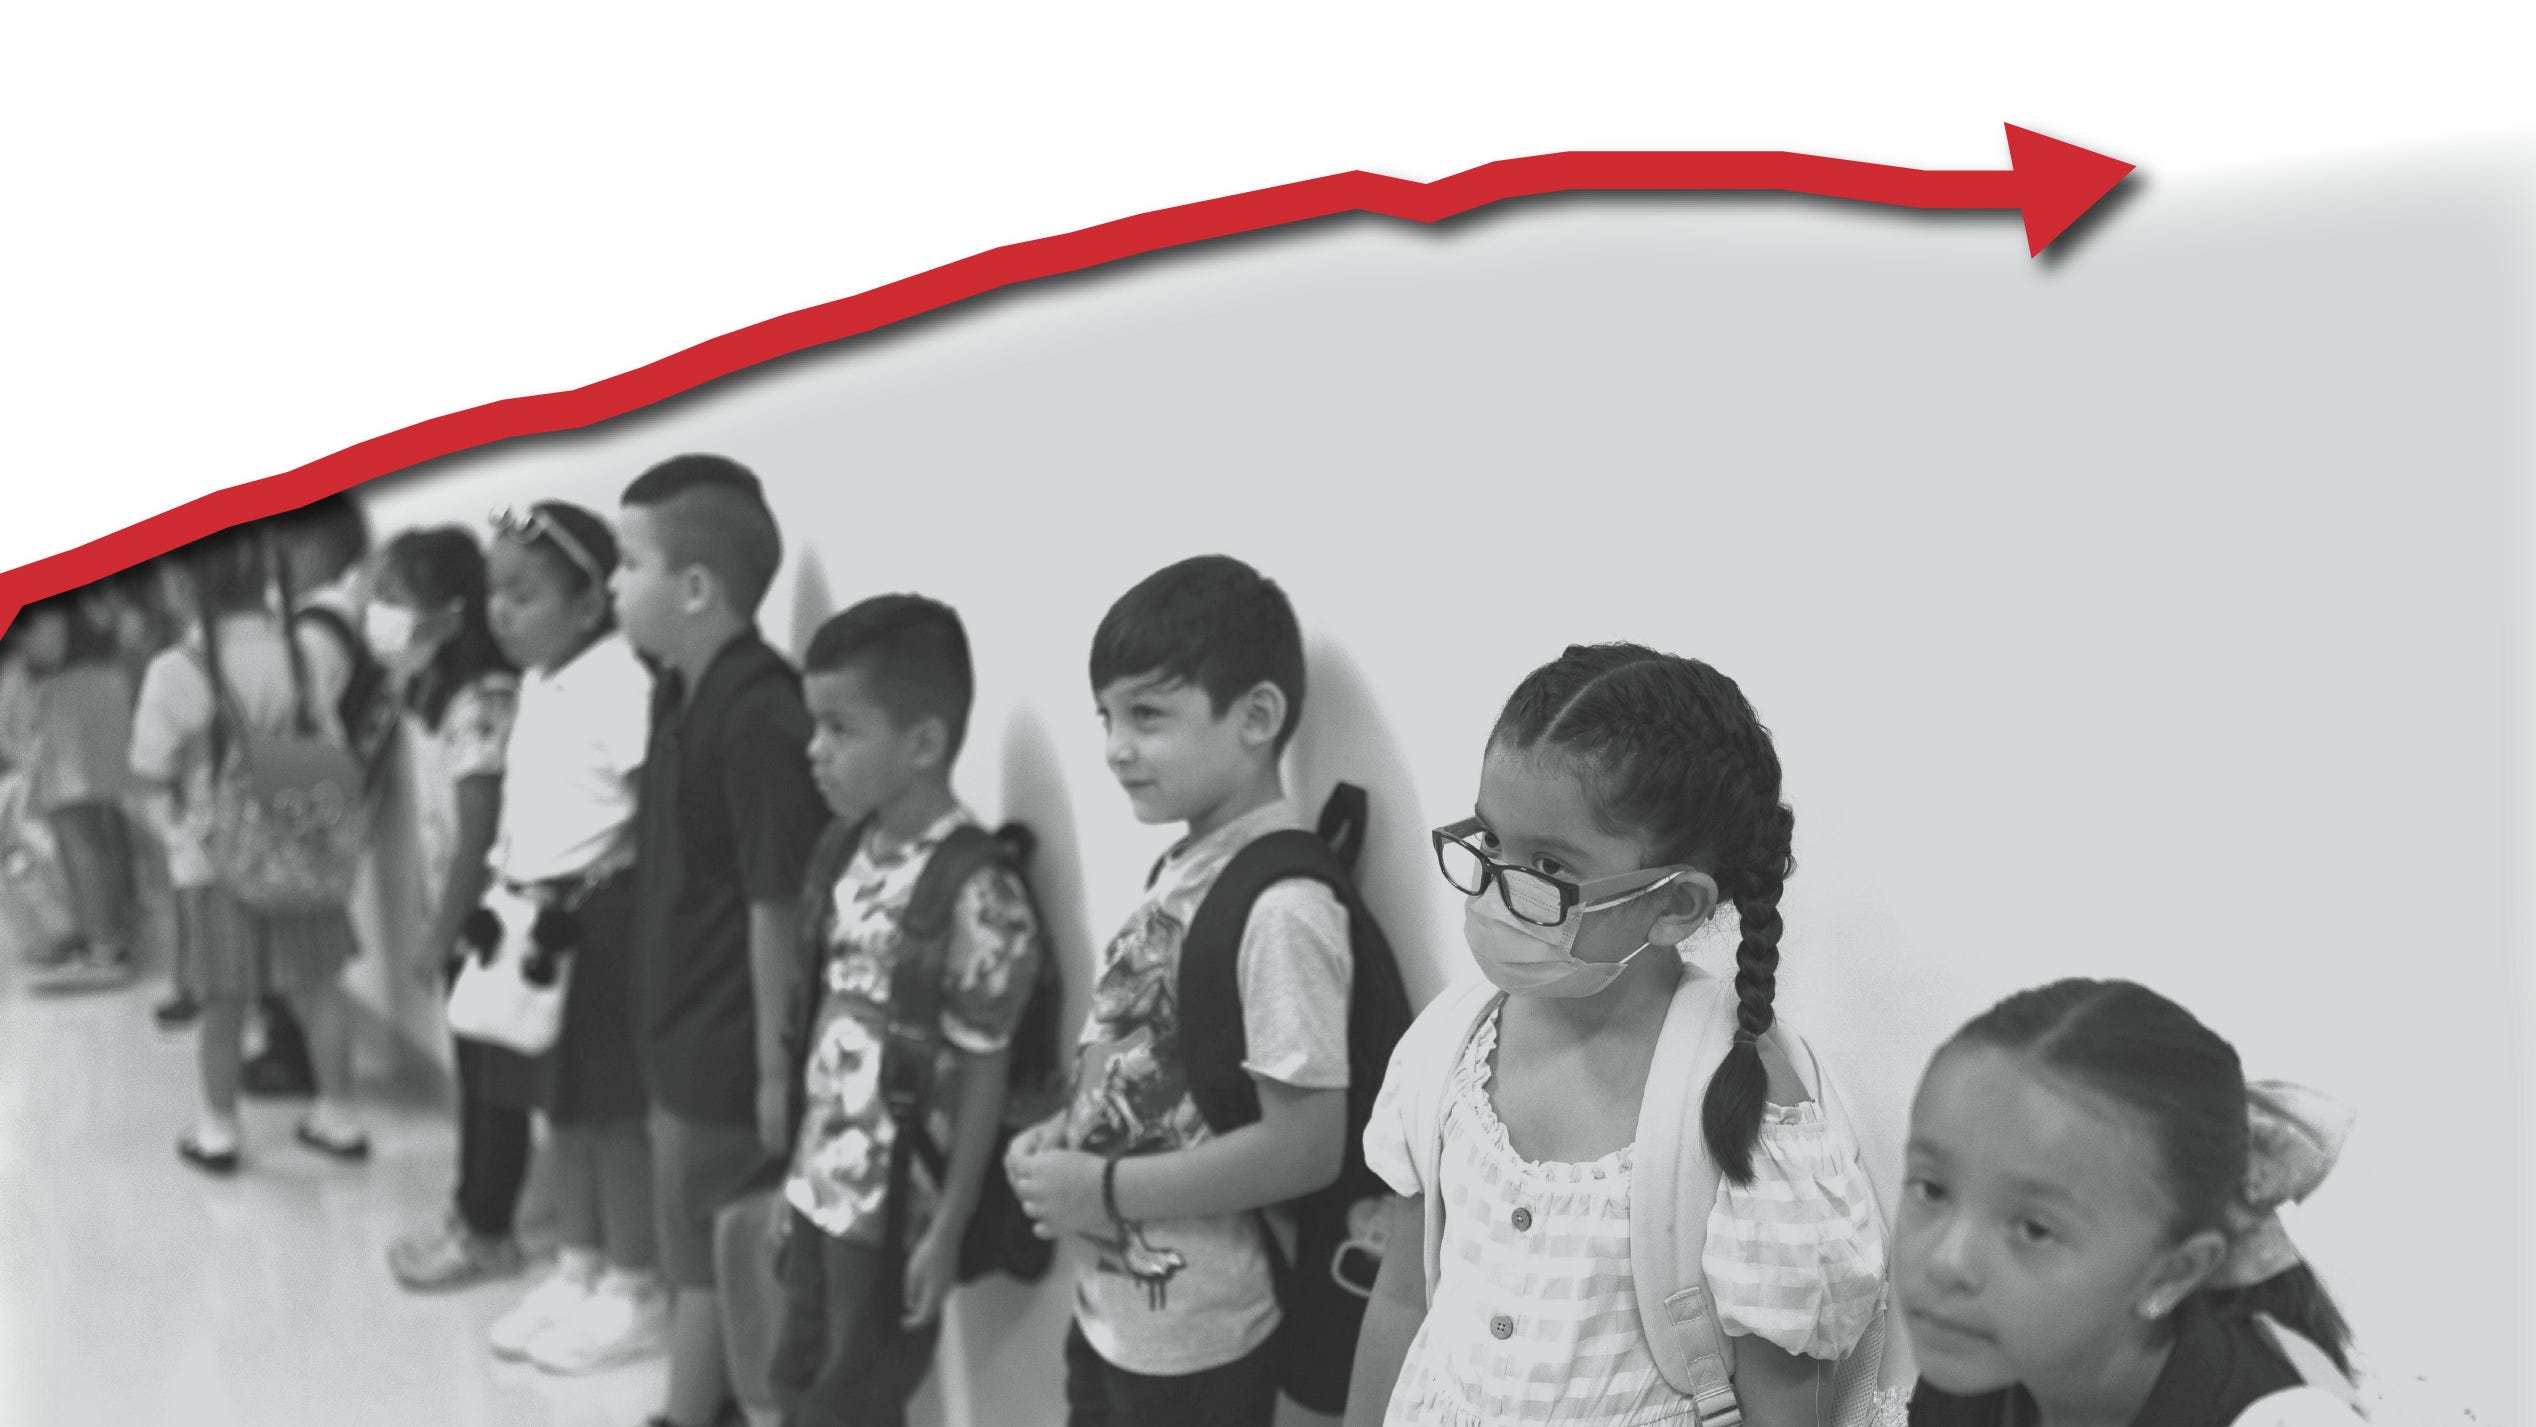 National Education Principles: Tackling the Teacher-Student Diversity Gap -  Latinos for Education